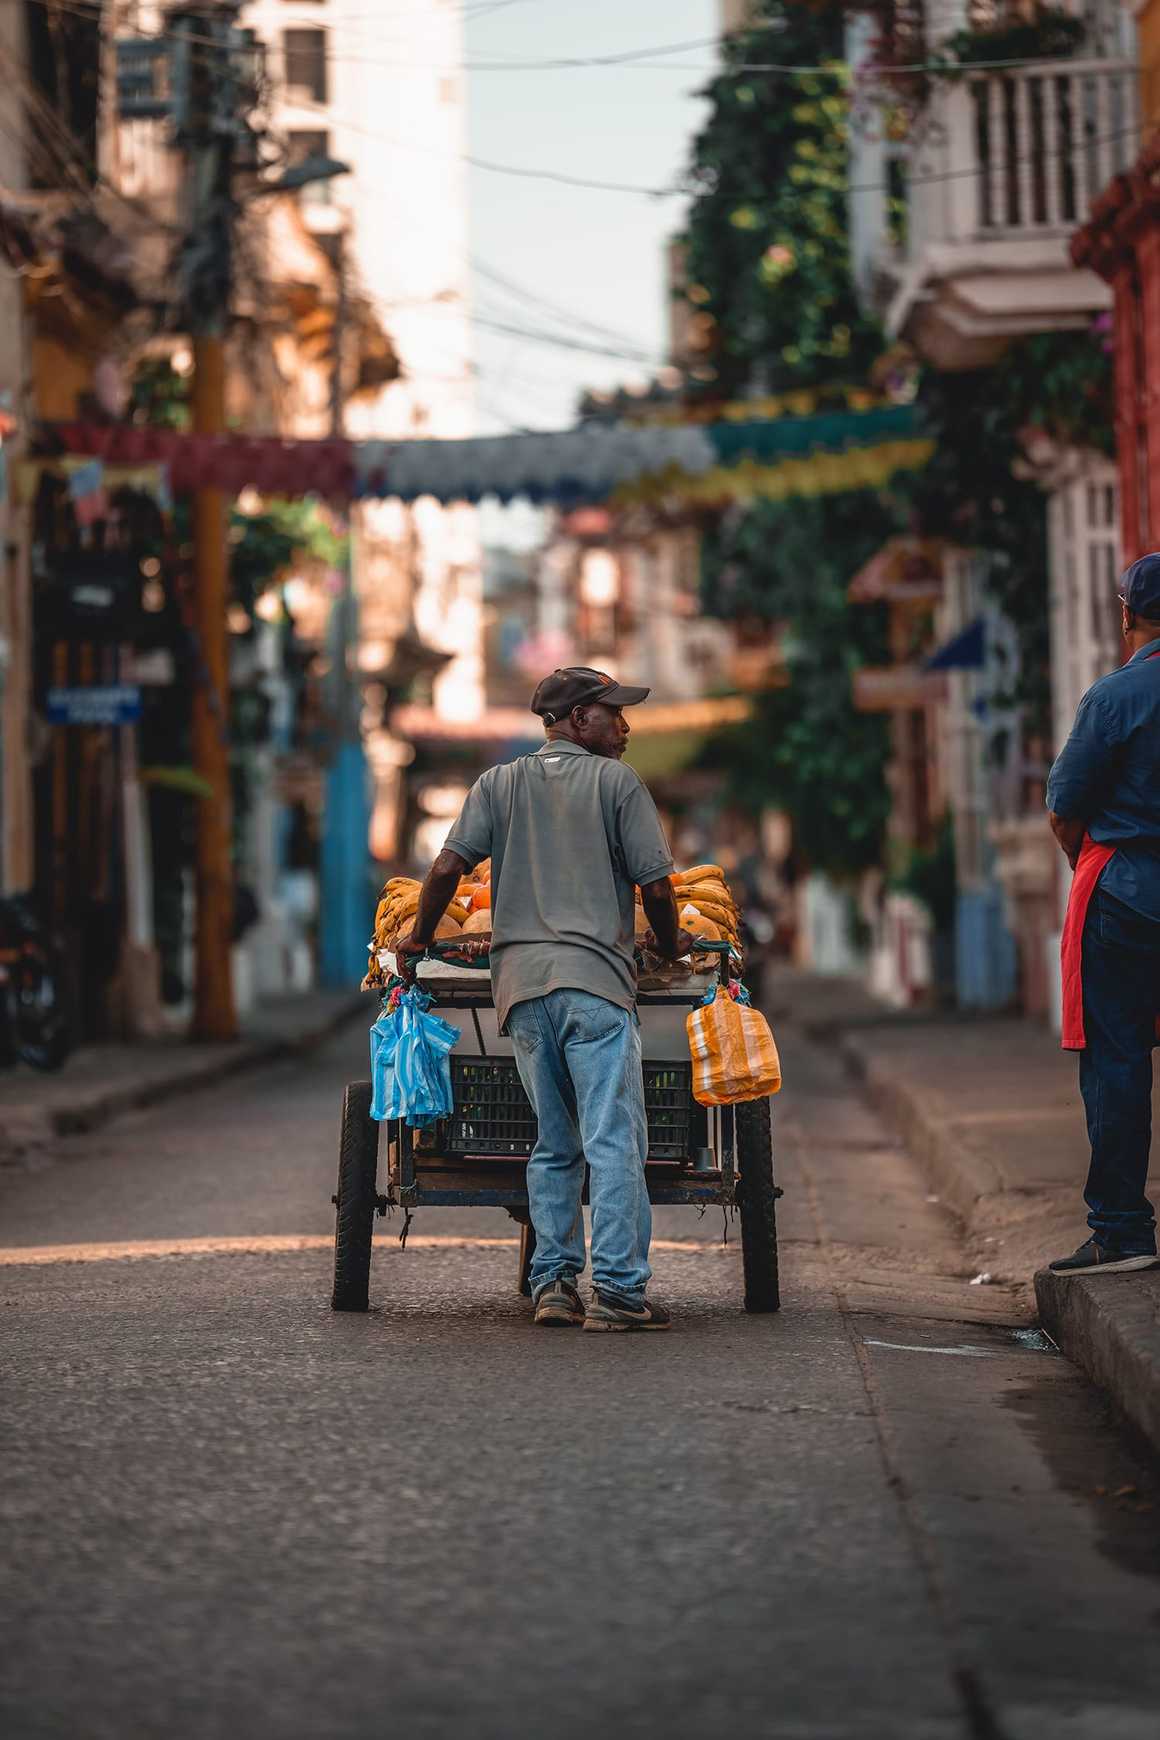 A man with a cart